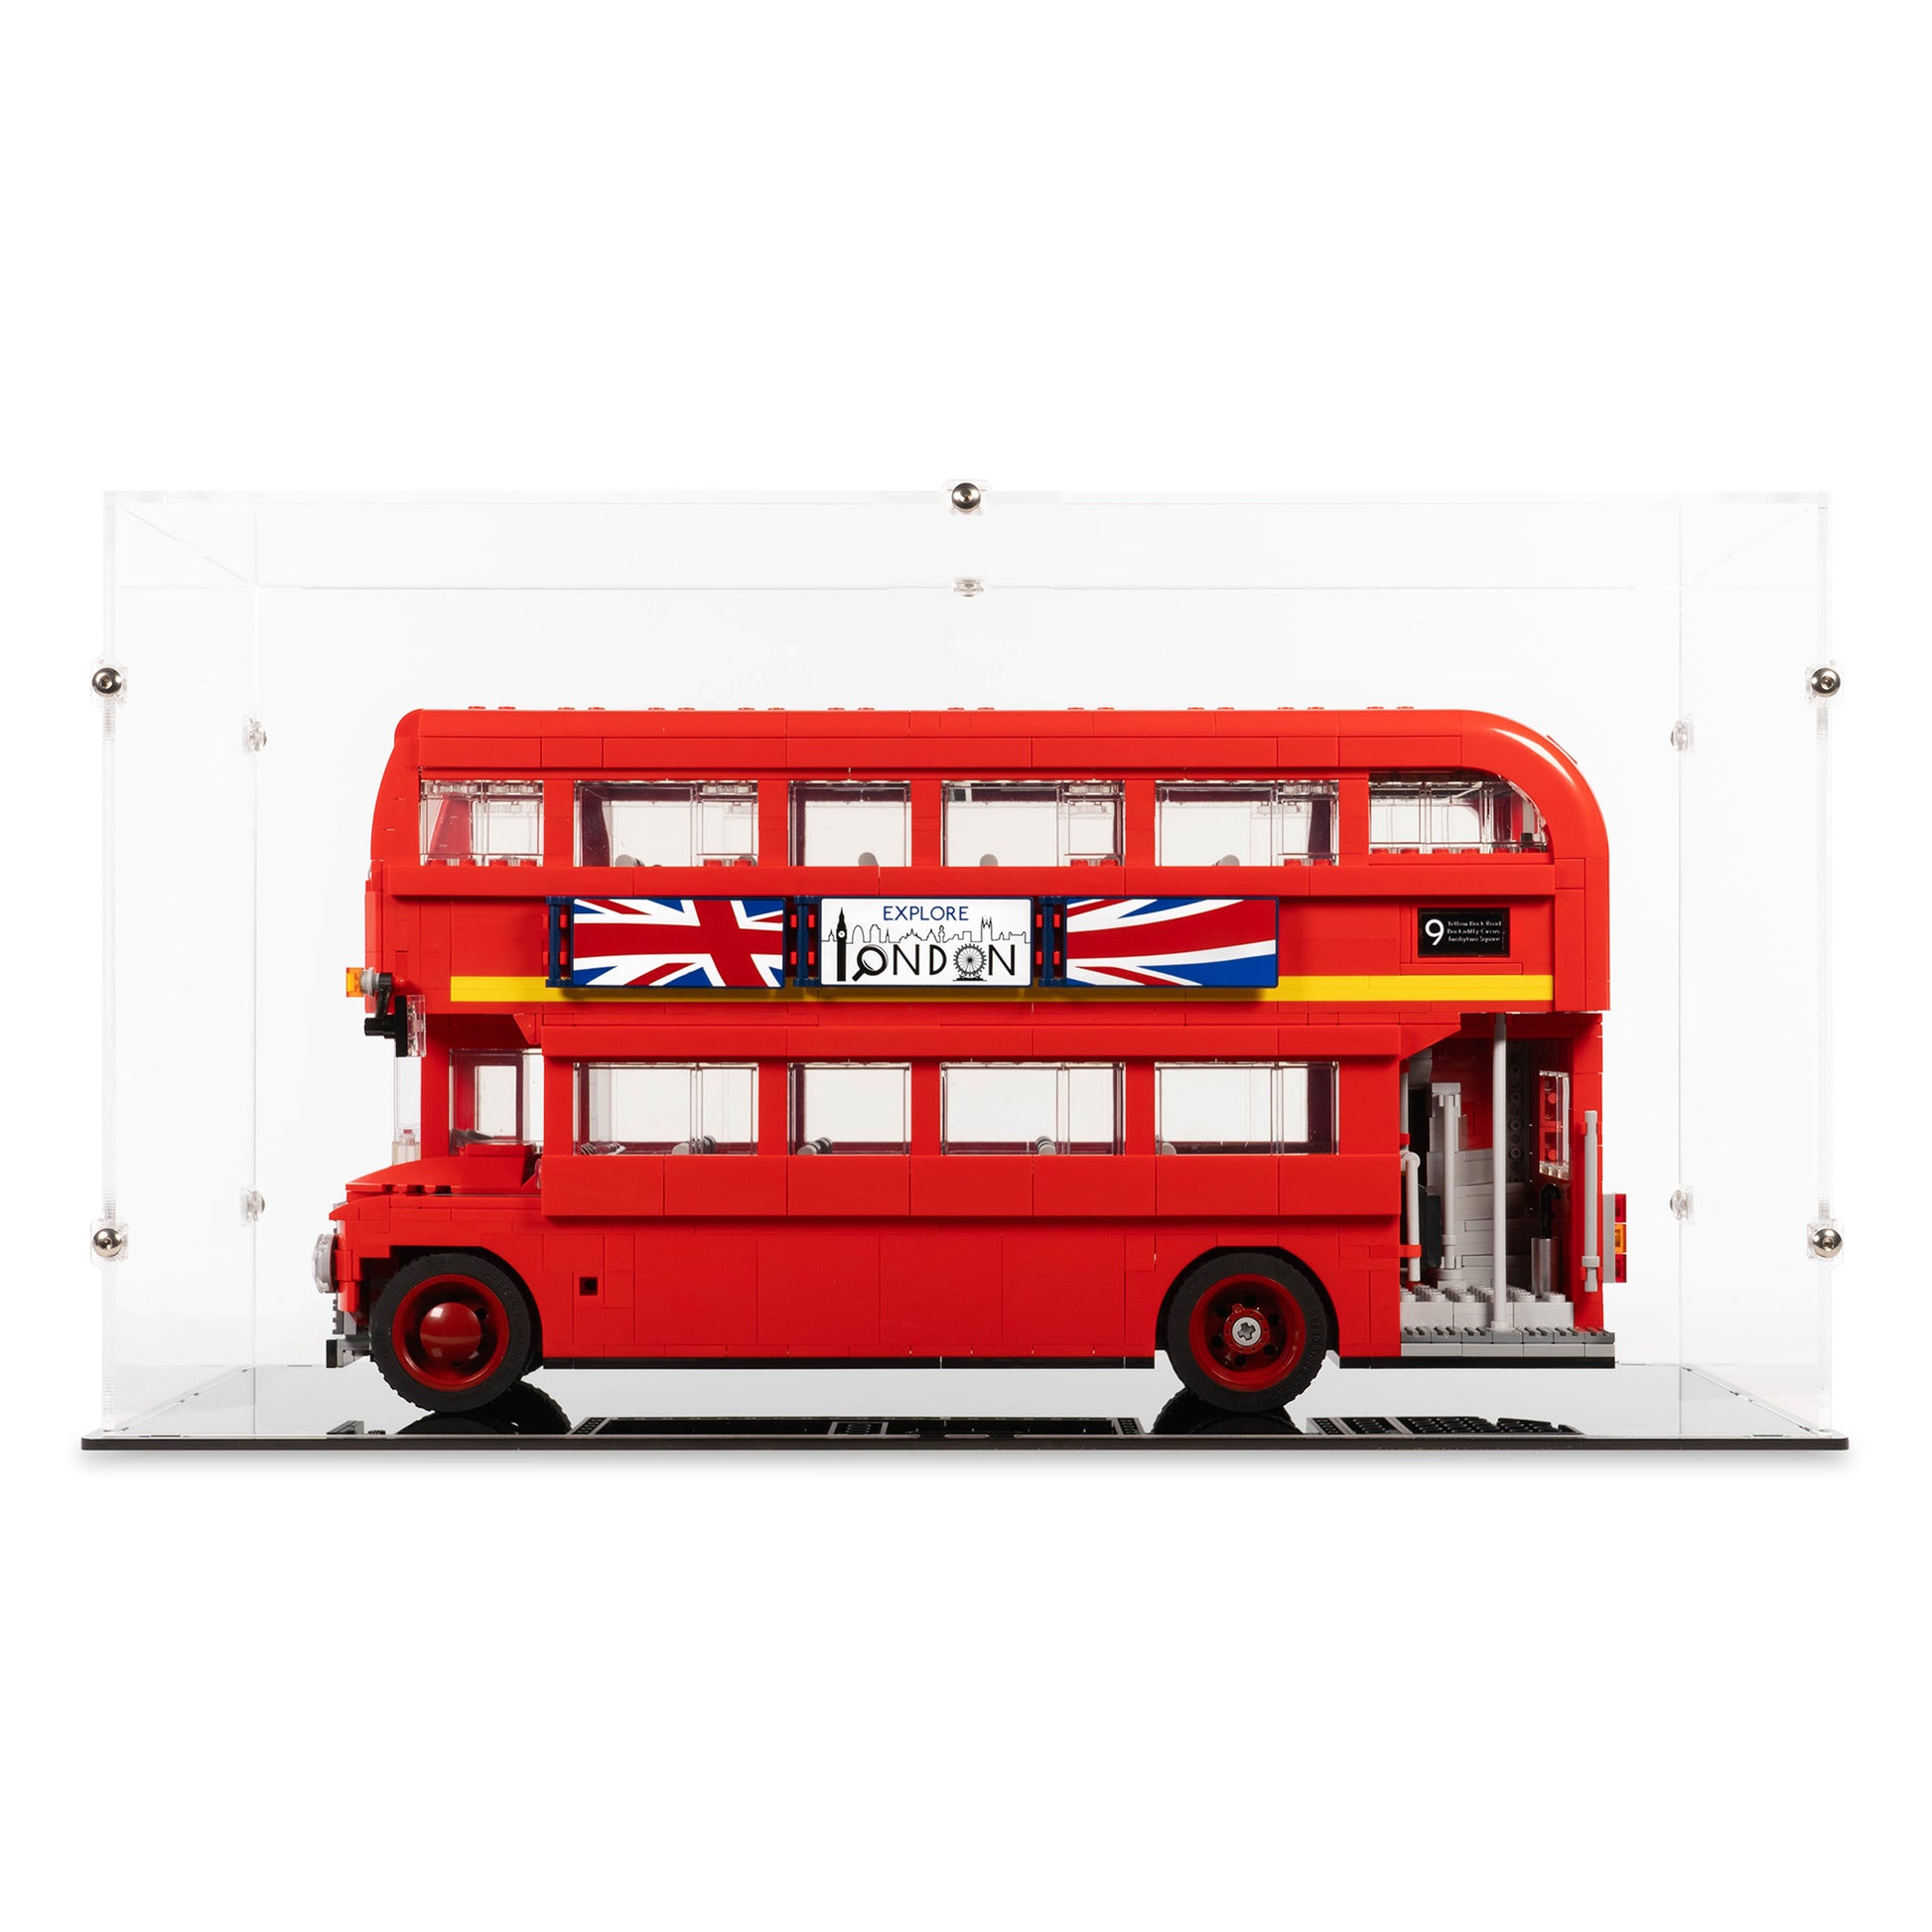 Take the LEGO London Bus